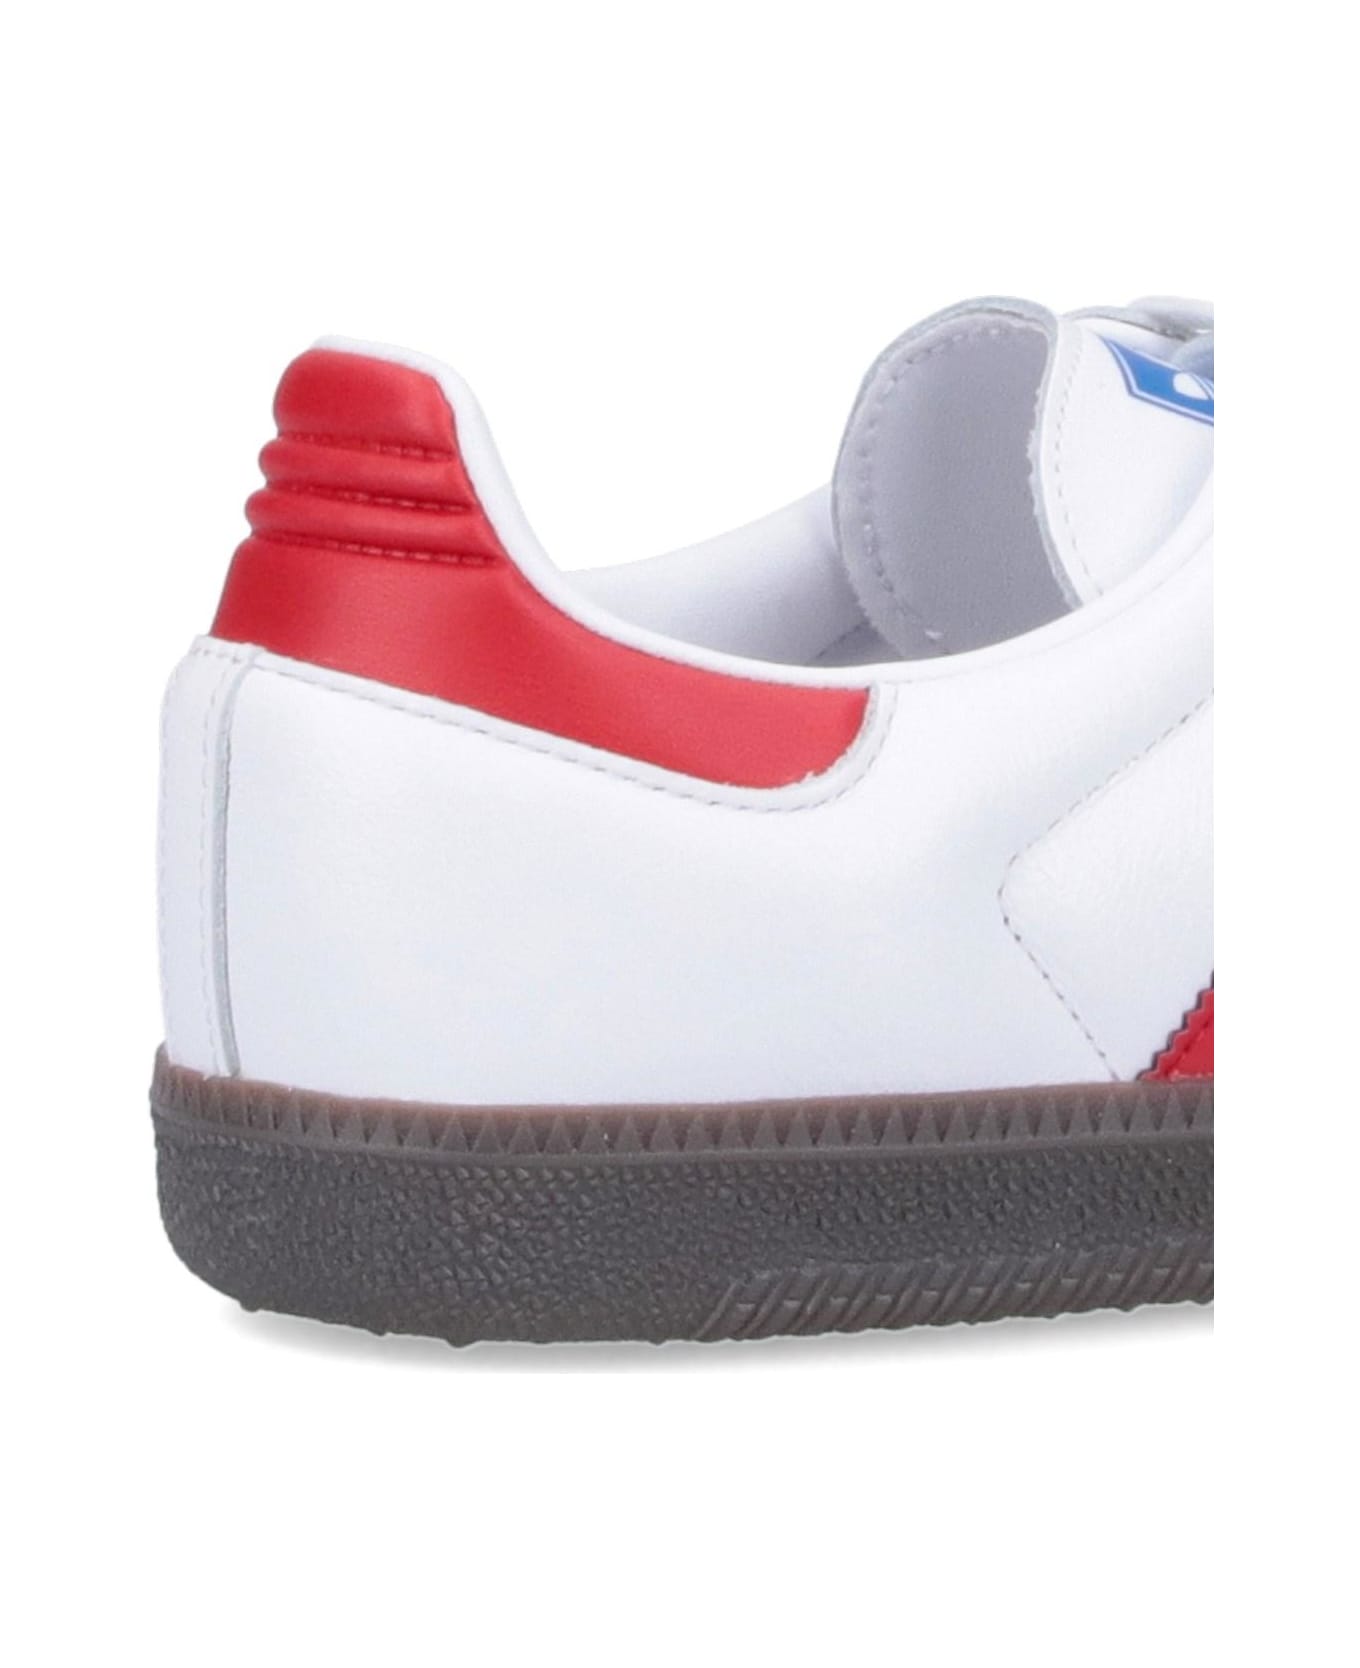 Adidas Originals 'samba' Sneakers - Ftwwht/betsca/supcol